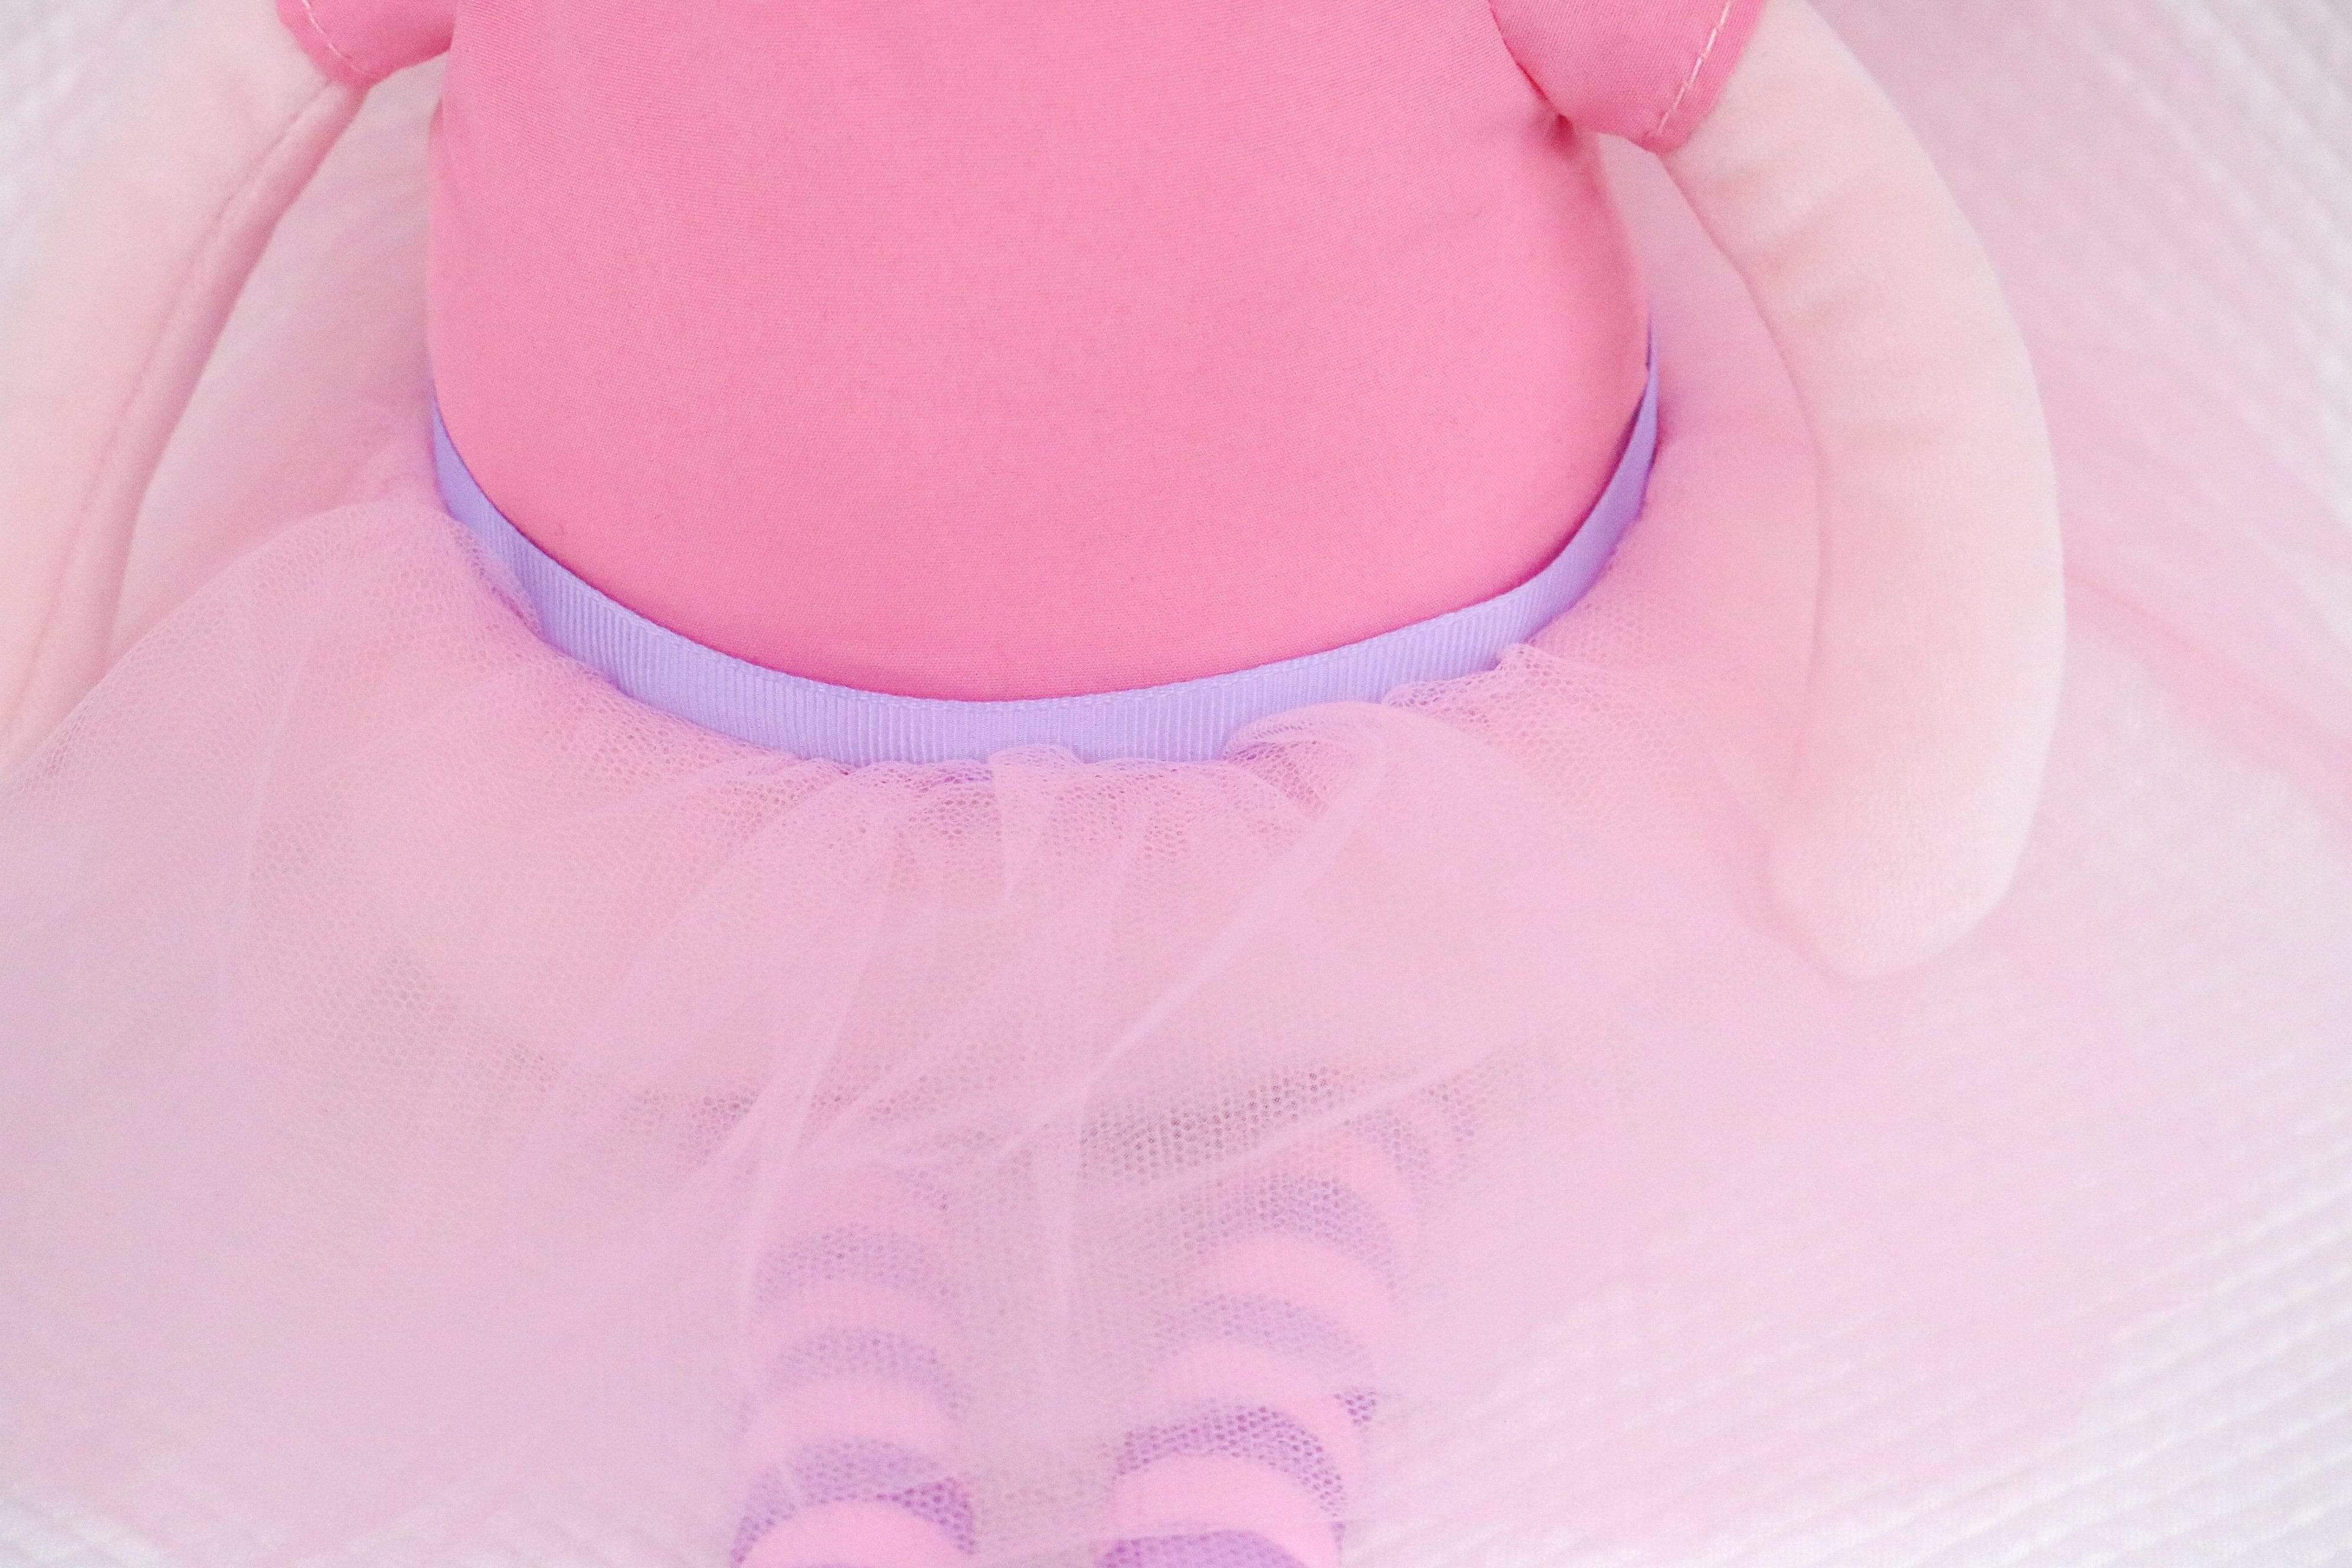 Meg Fairy Plush Doll With Dress/wings